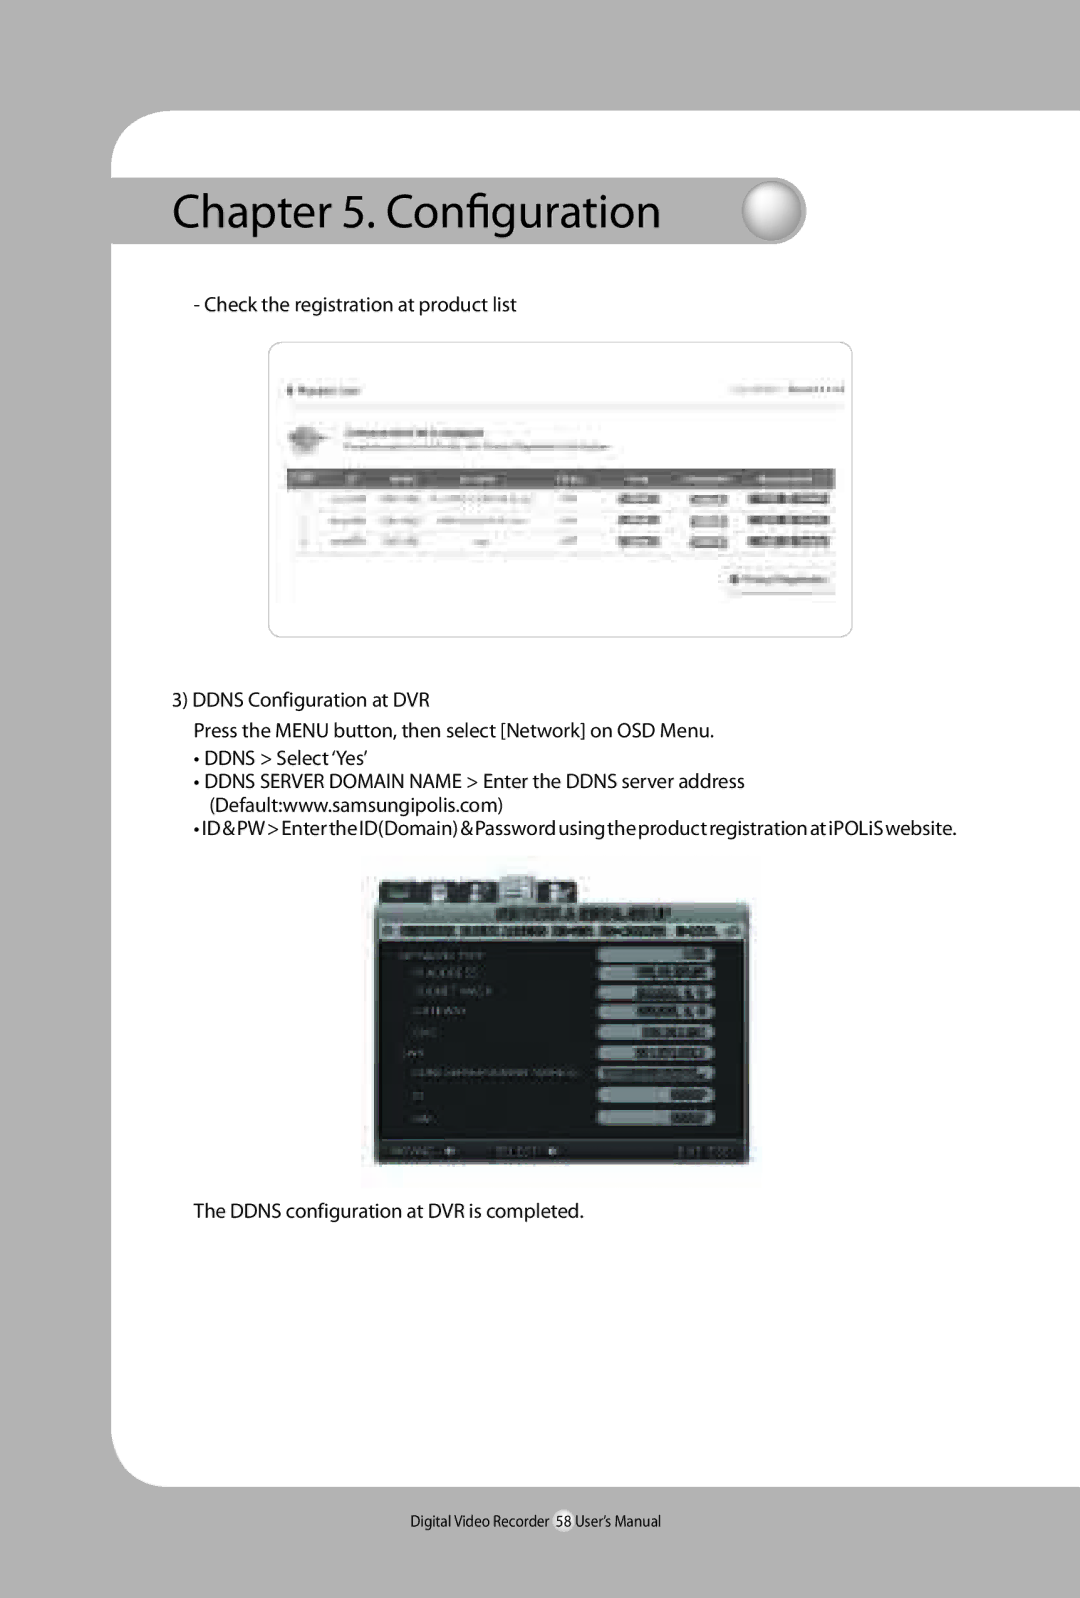 Samsung SVR-940, 450 user manual Digital Video Recorder 58 User’s Manual 